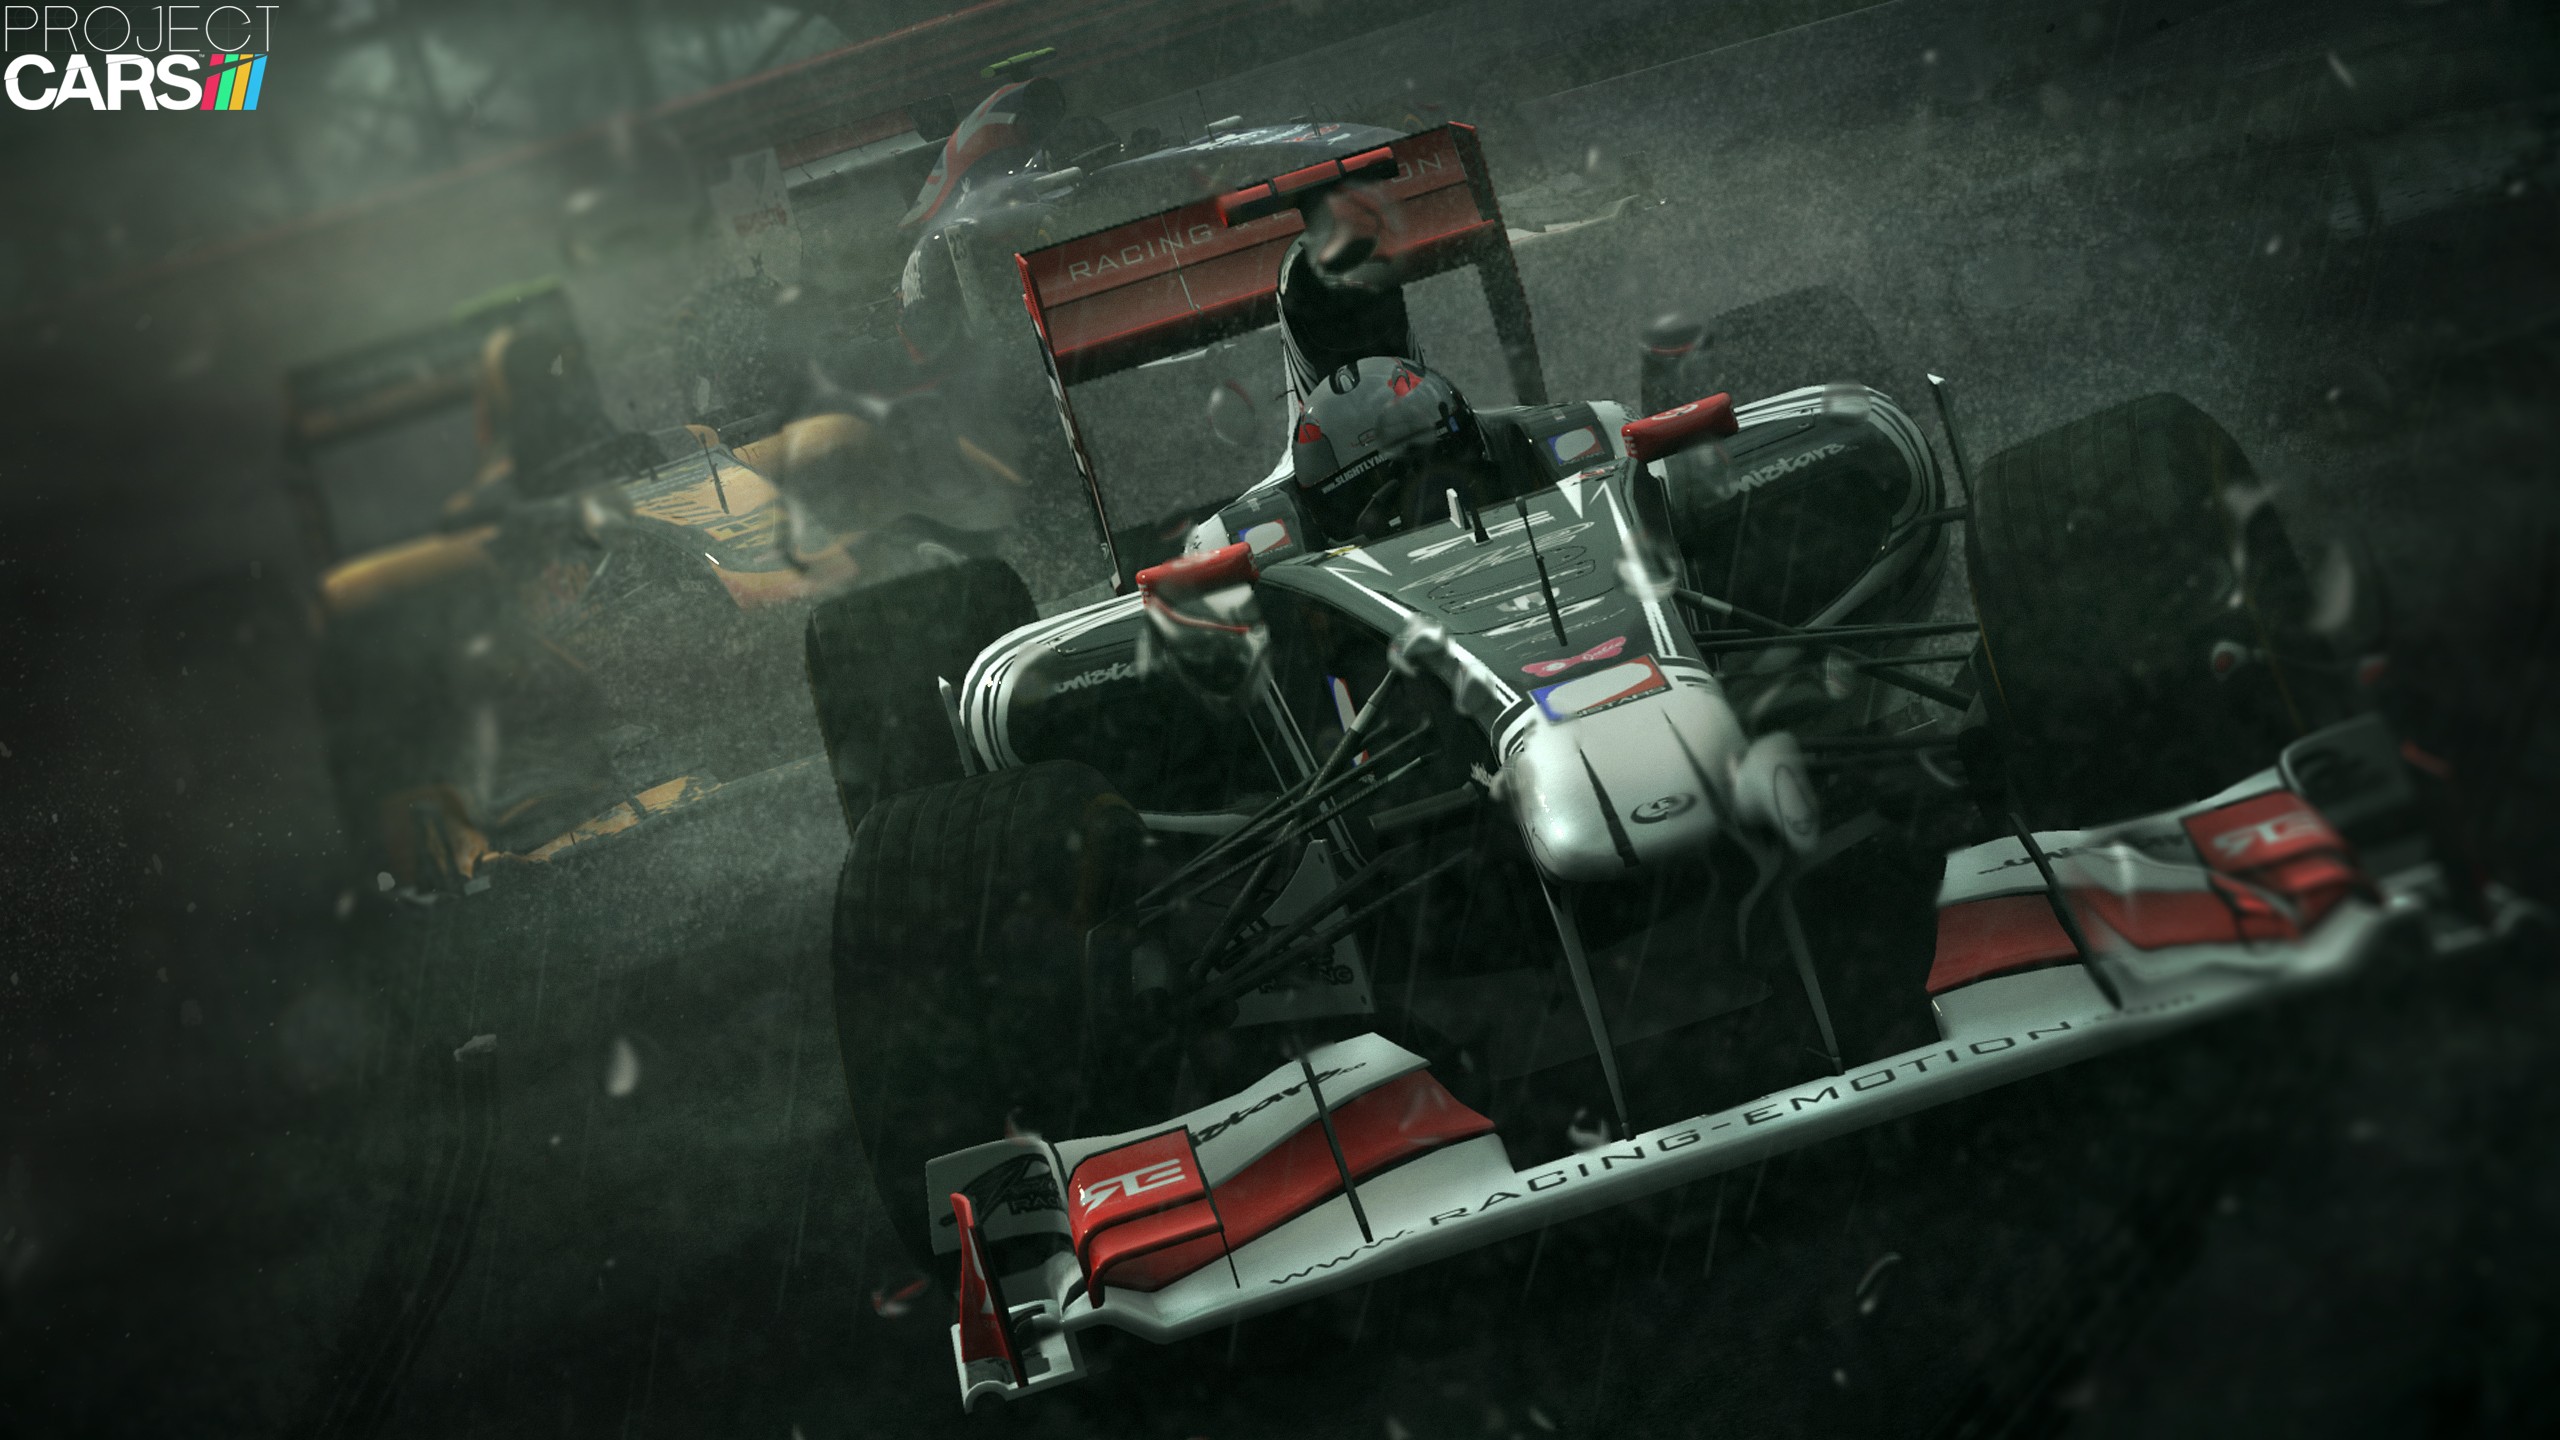 General 2560x1440 race cars car racing vehicle Project cars motorsport rain video games PC gaming video game art